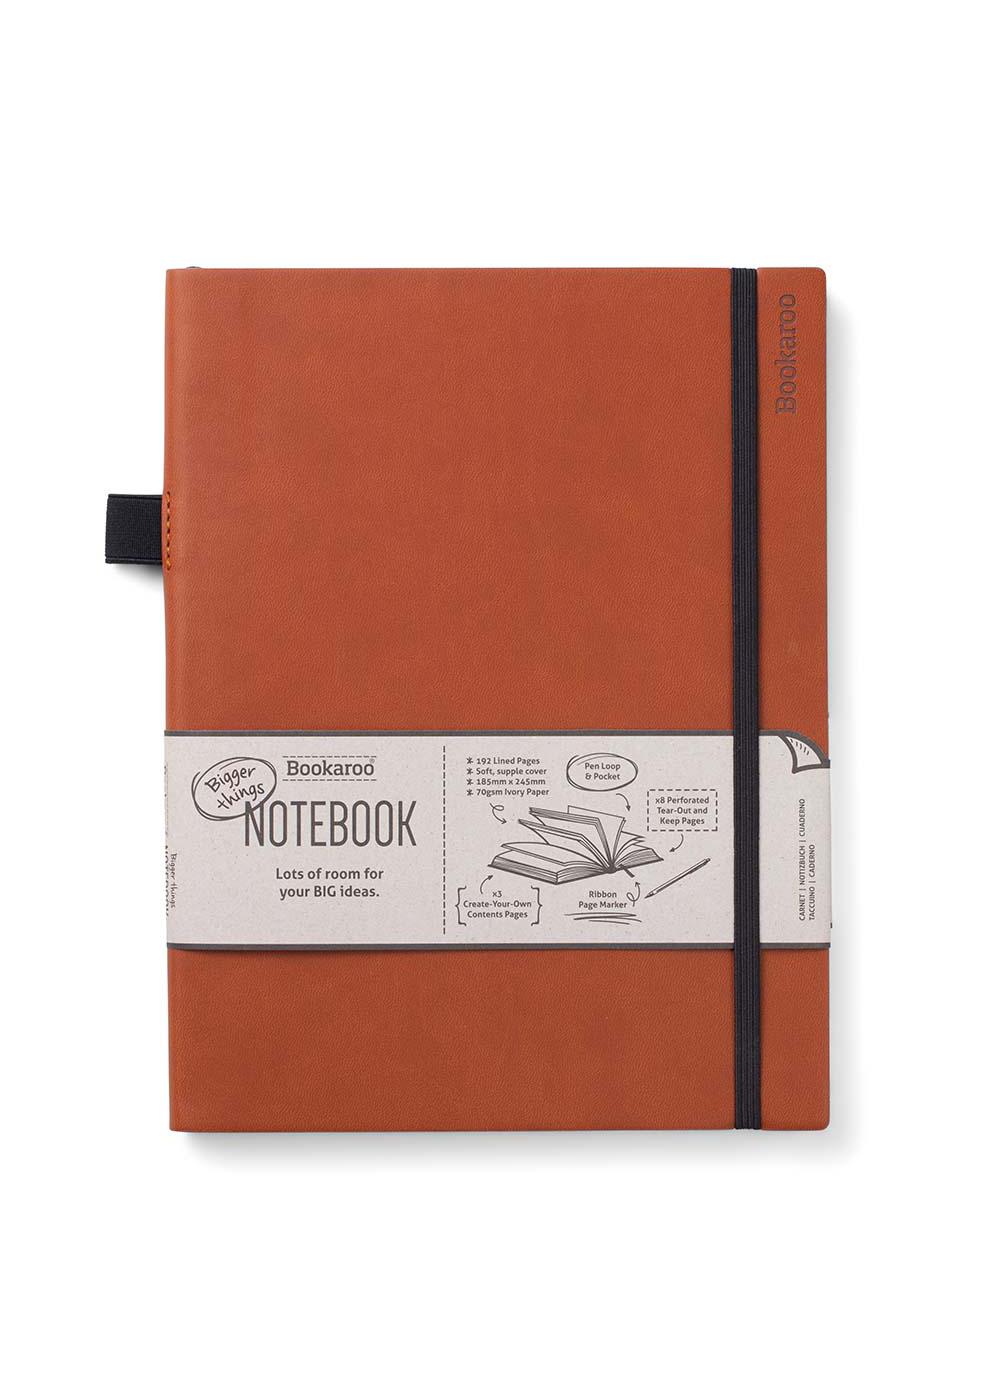 Bookaroo Bigger Things Notebook - Brown; image 1 of 2